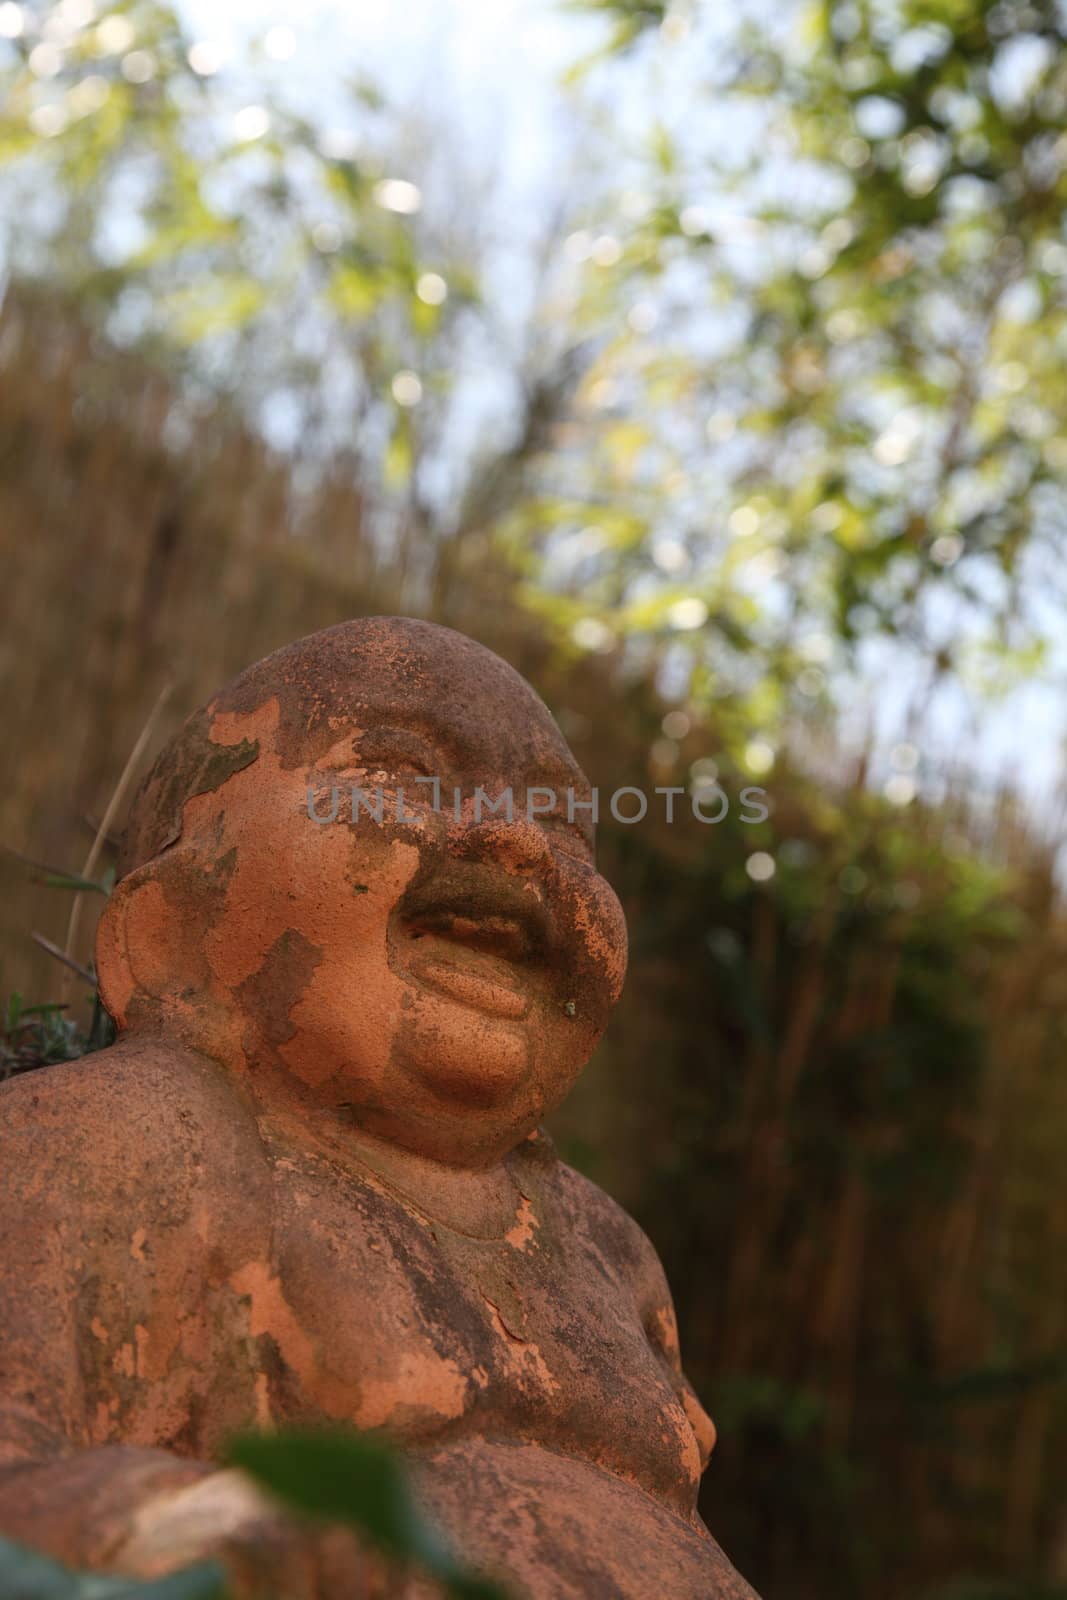 Smiling Buddha statue by Farina6000